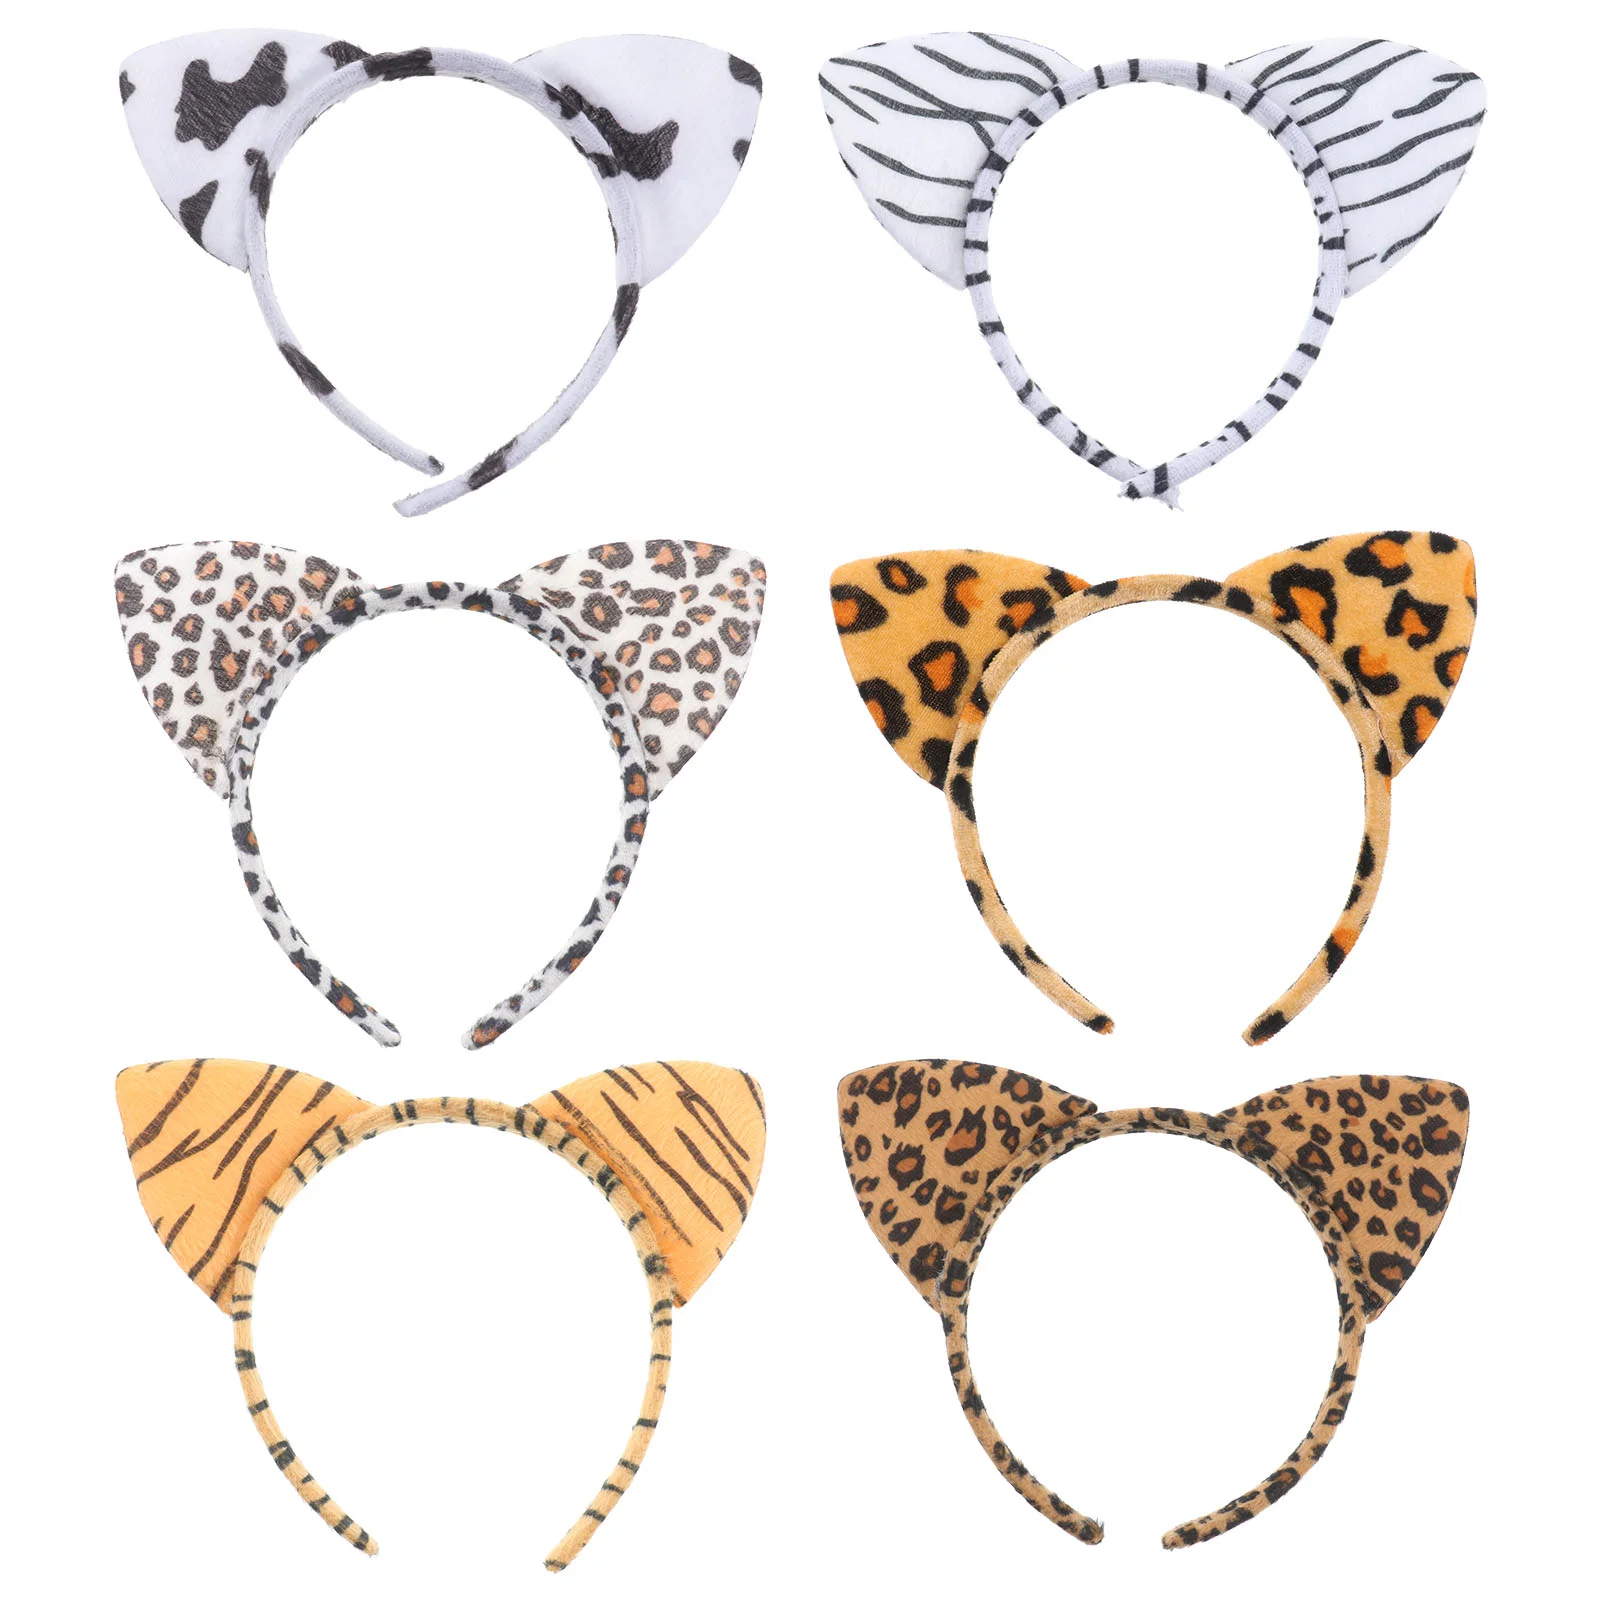 

6pcs Cat Ear Headbands Plush Leopard Cartoon Hair Hoops Funny Costume Hair Accessories for Festivals Party